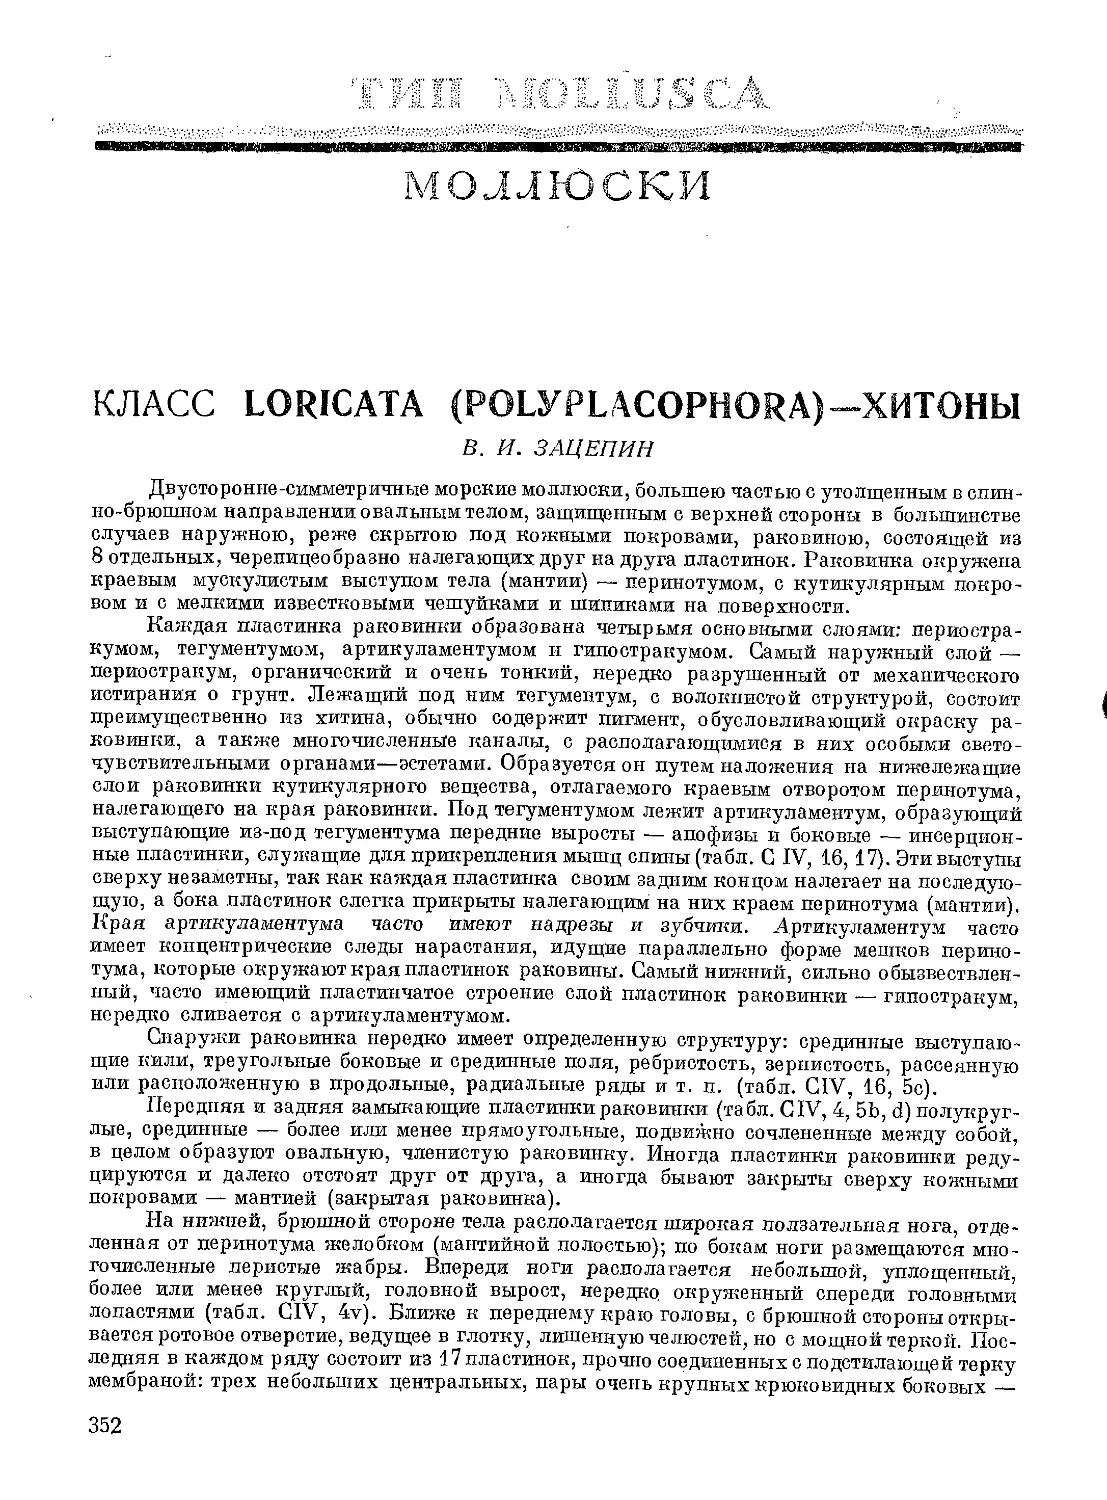 Класс Loricata - Хитоны